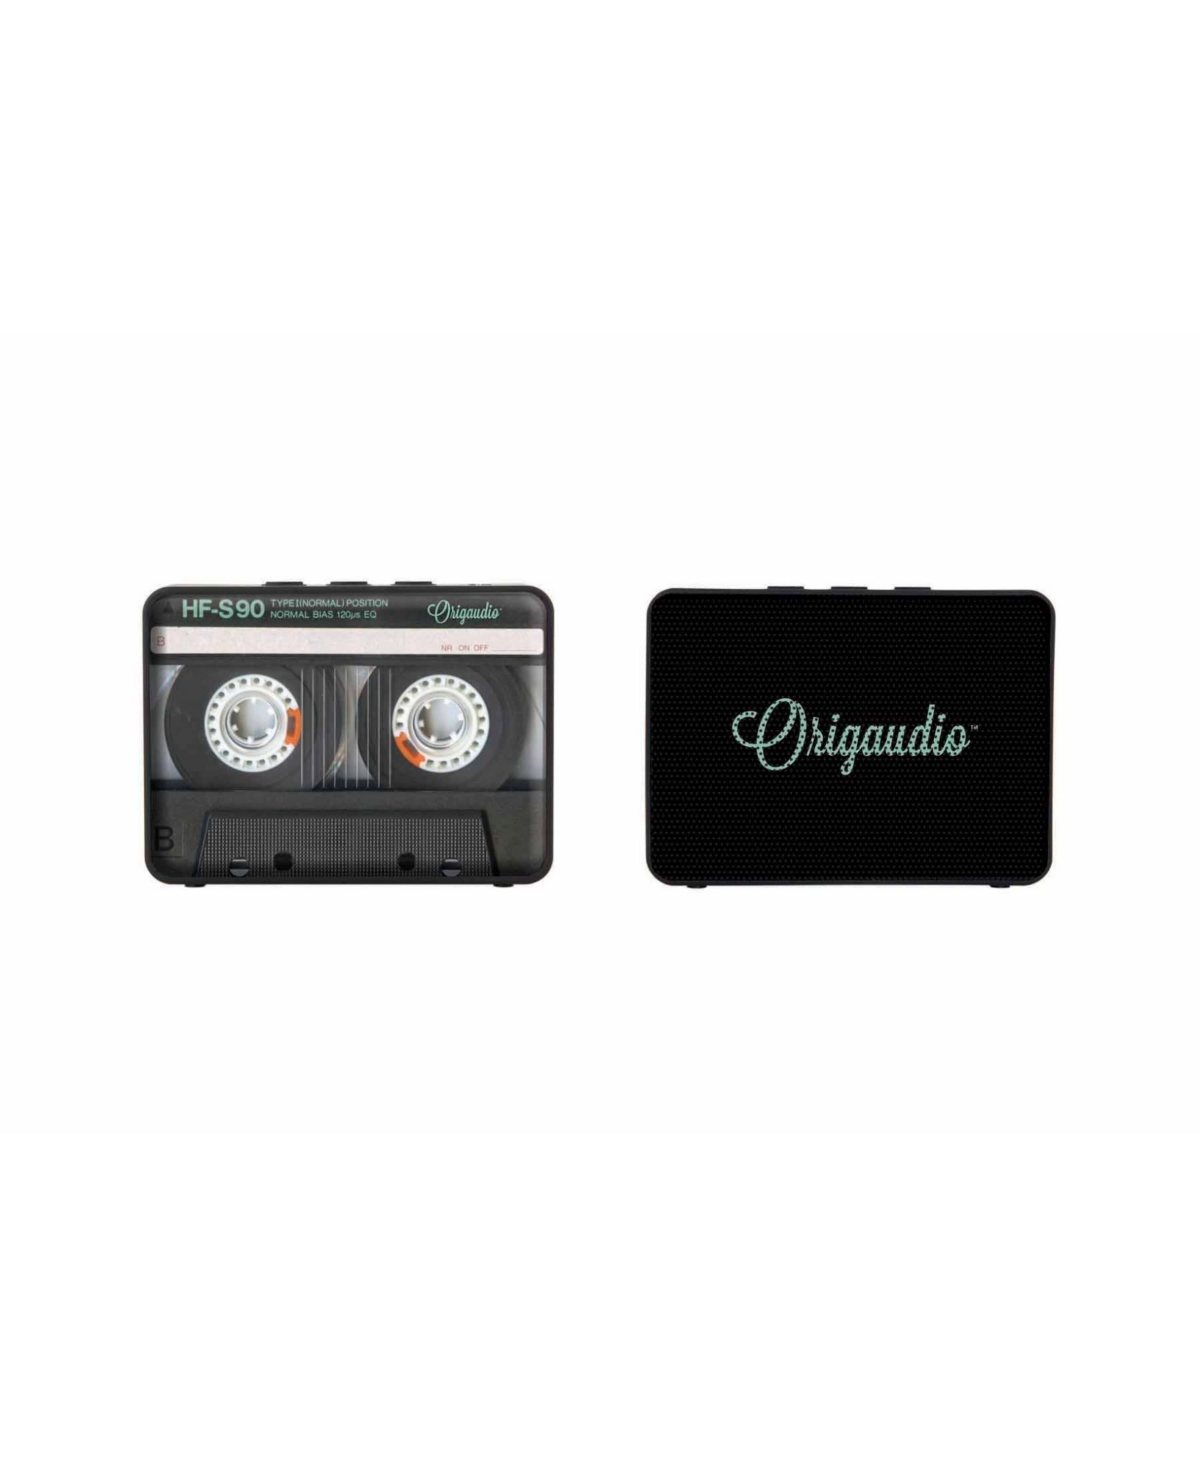 Origaudio Boxanne Bluetooth Speaker - Compact Portable Speaker